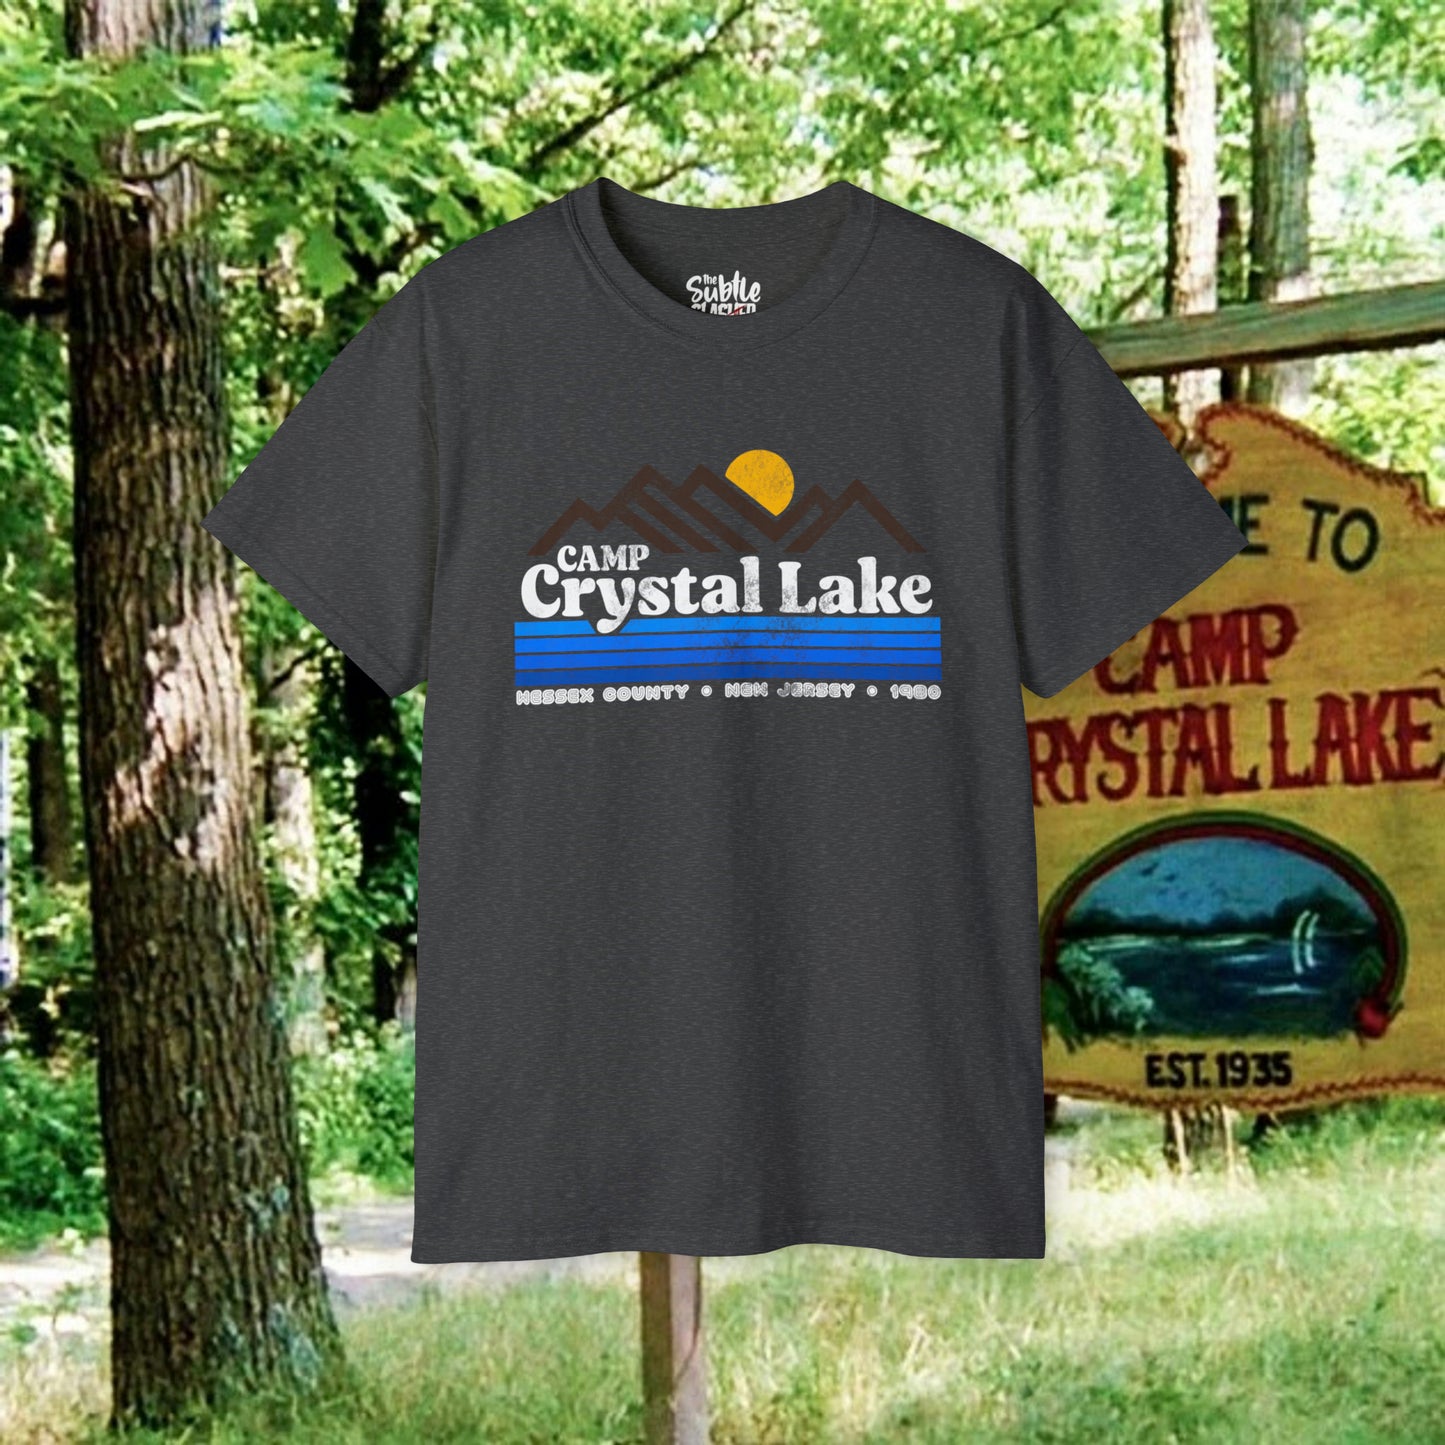 Camp Crystal Lake Tee